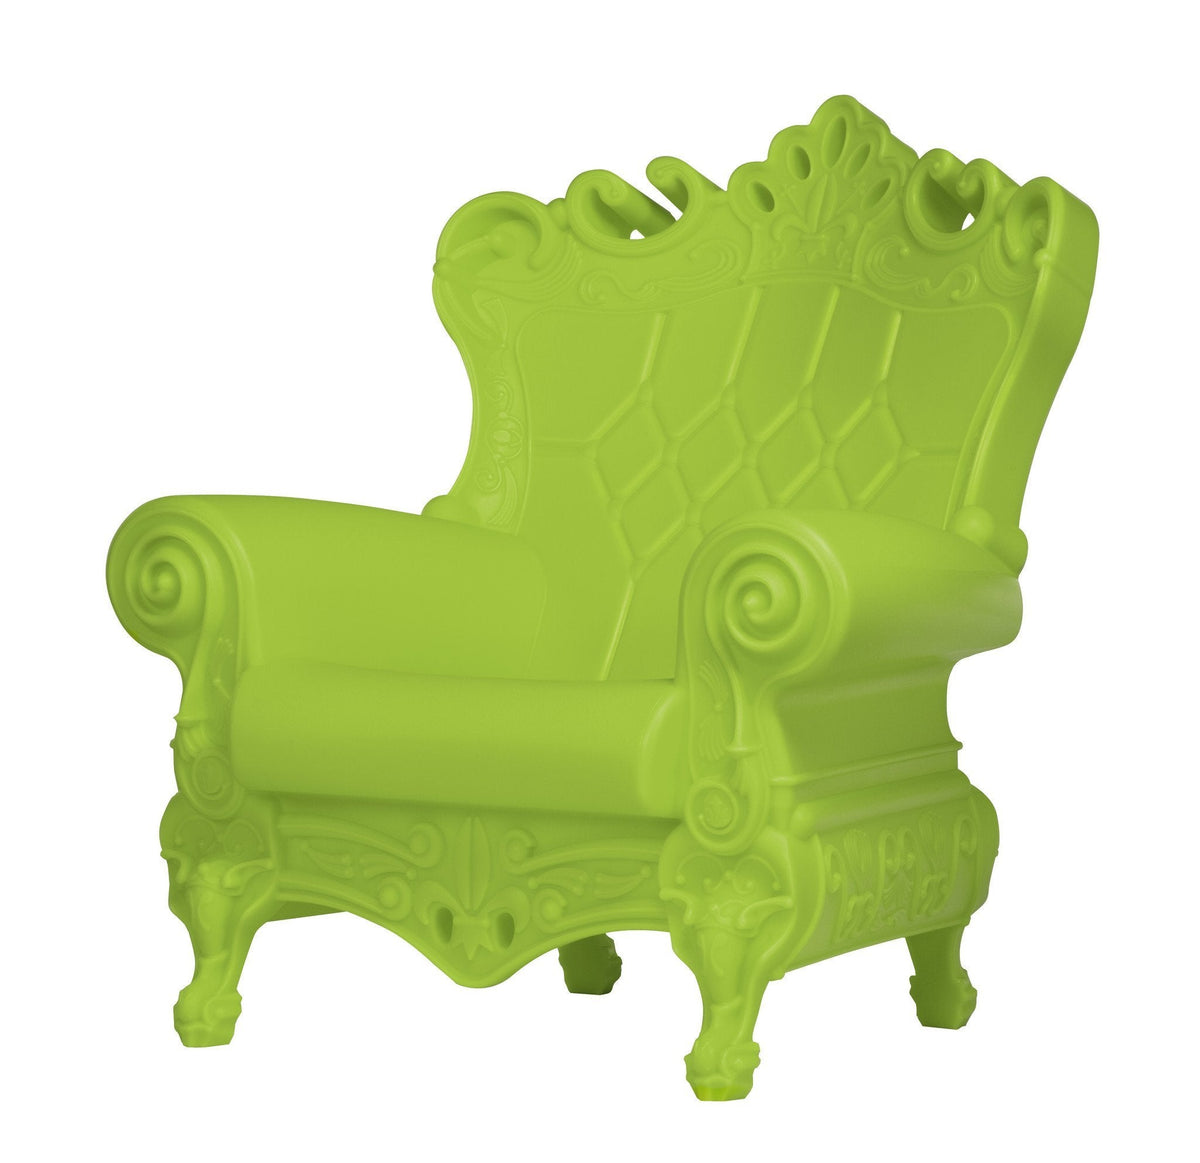 Little Queen Of Love Armchair-Slide-Contract Furniture Store